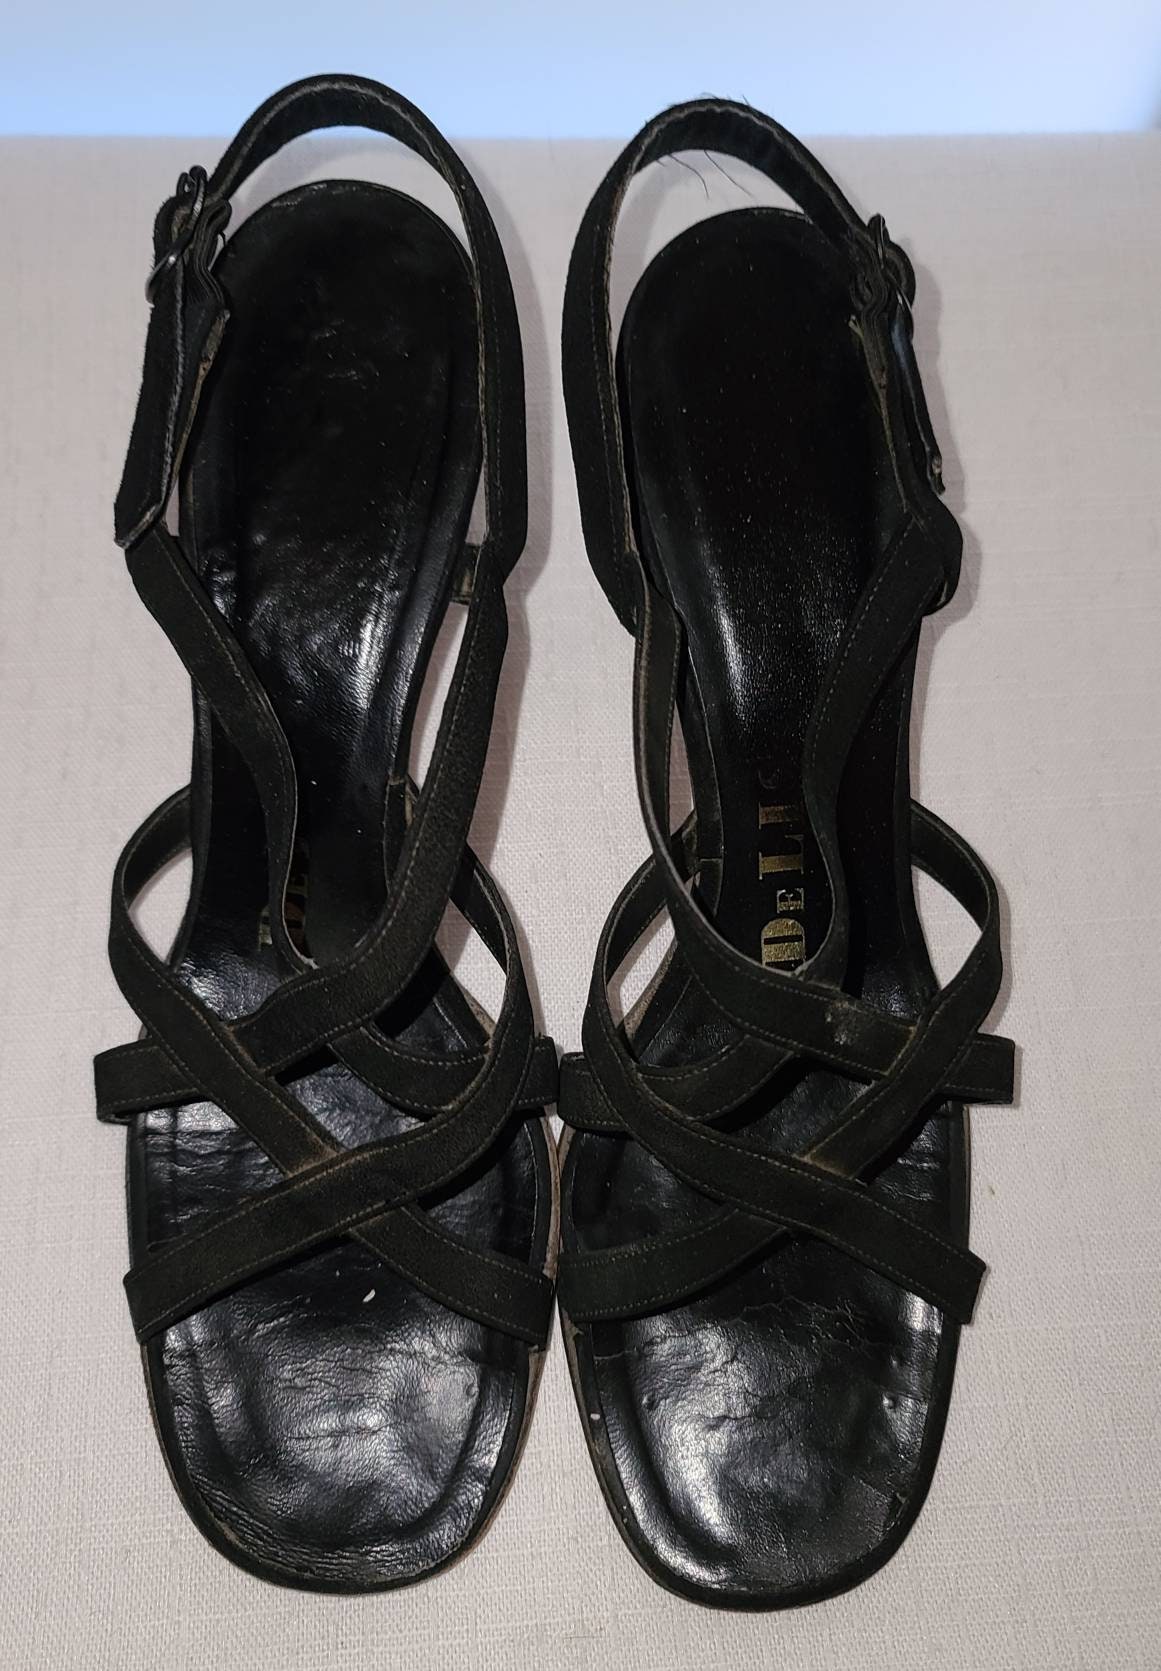 Vintage Evening Sandals 1950s 60s Black Suede Open Weave Sandals Shoes Small Heel Mid Century Rockabilly 7.5